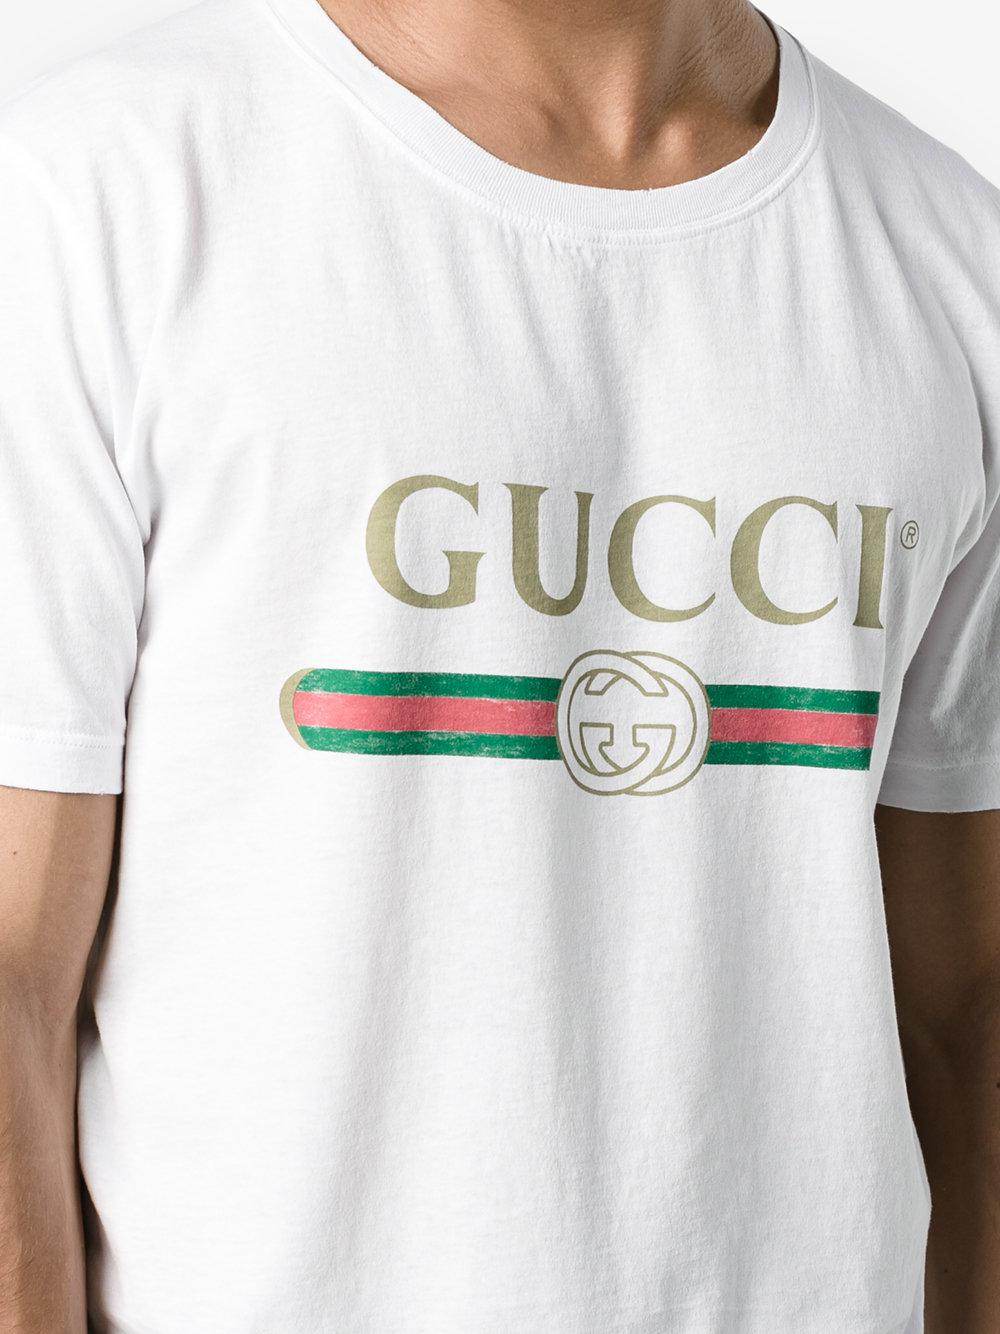 gucci first copy t shirt